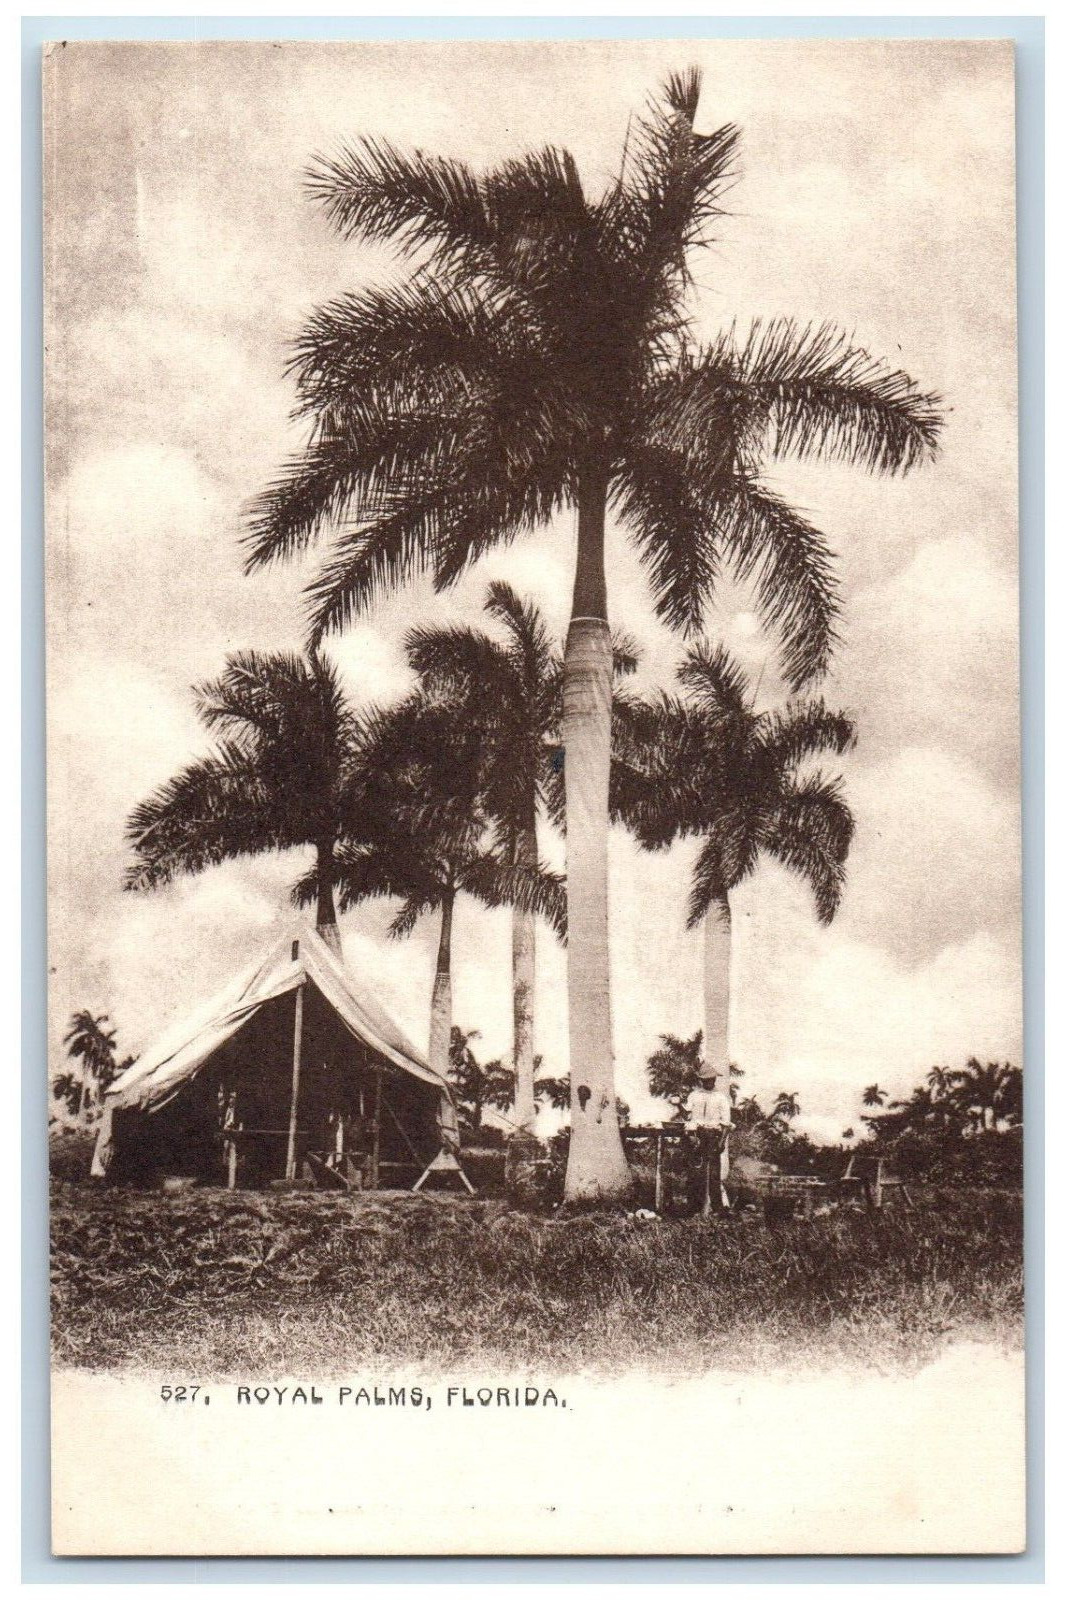 1898 Royal Palms Pine Trees Hut Farm Florida Vintage Antique Unposted Postcard